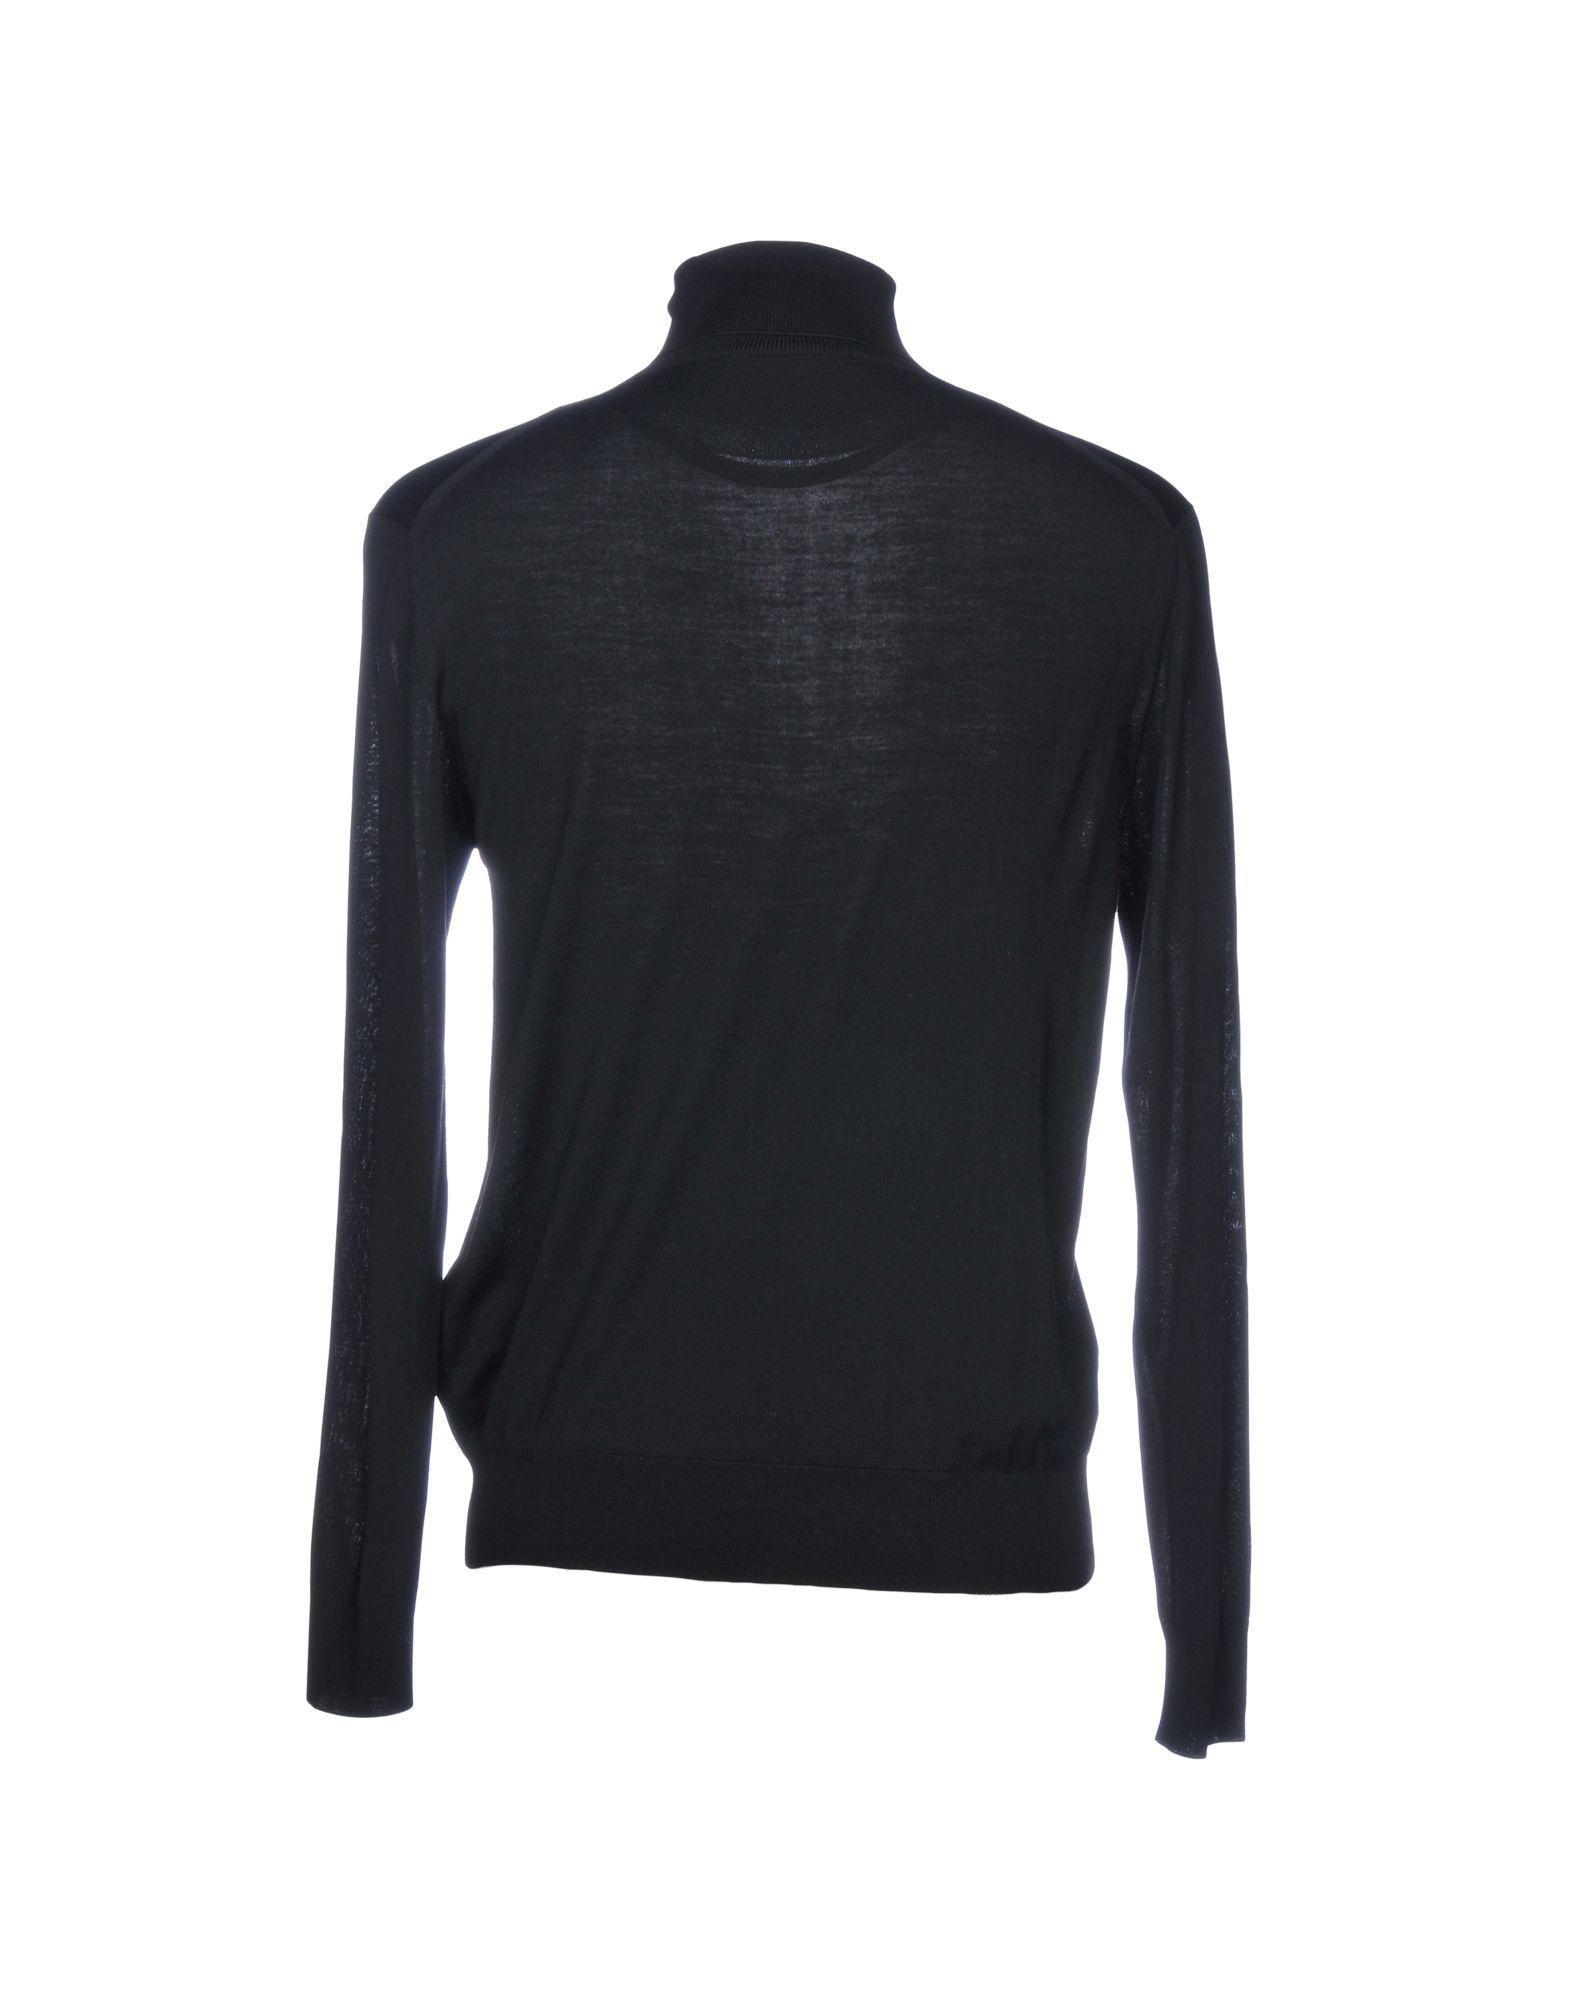 Prada Wool Turtleneck in Black for Men - Lyst